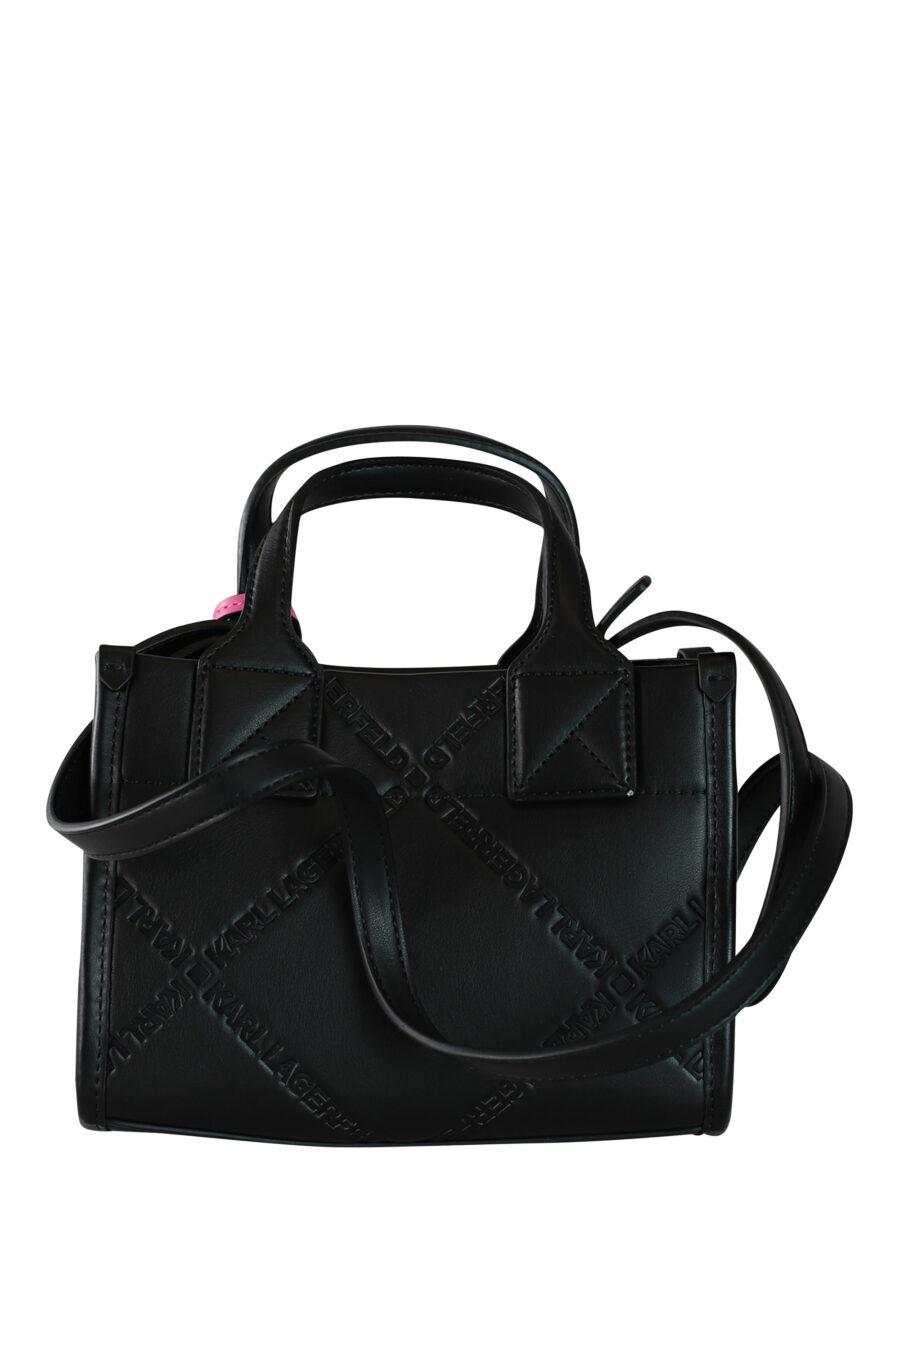 Tote bag mini black /k/skuare/ with embossed logo - 8720744102557 3